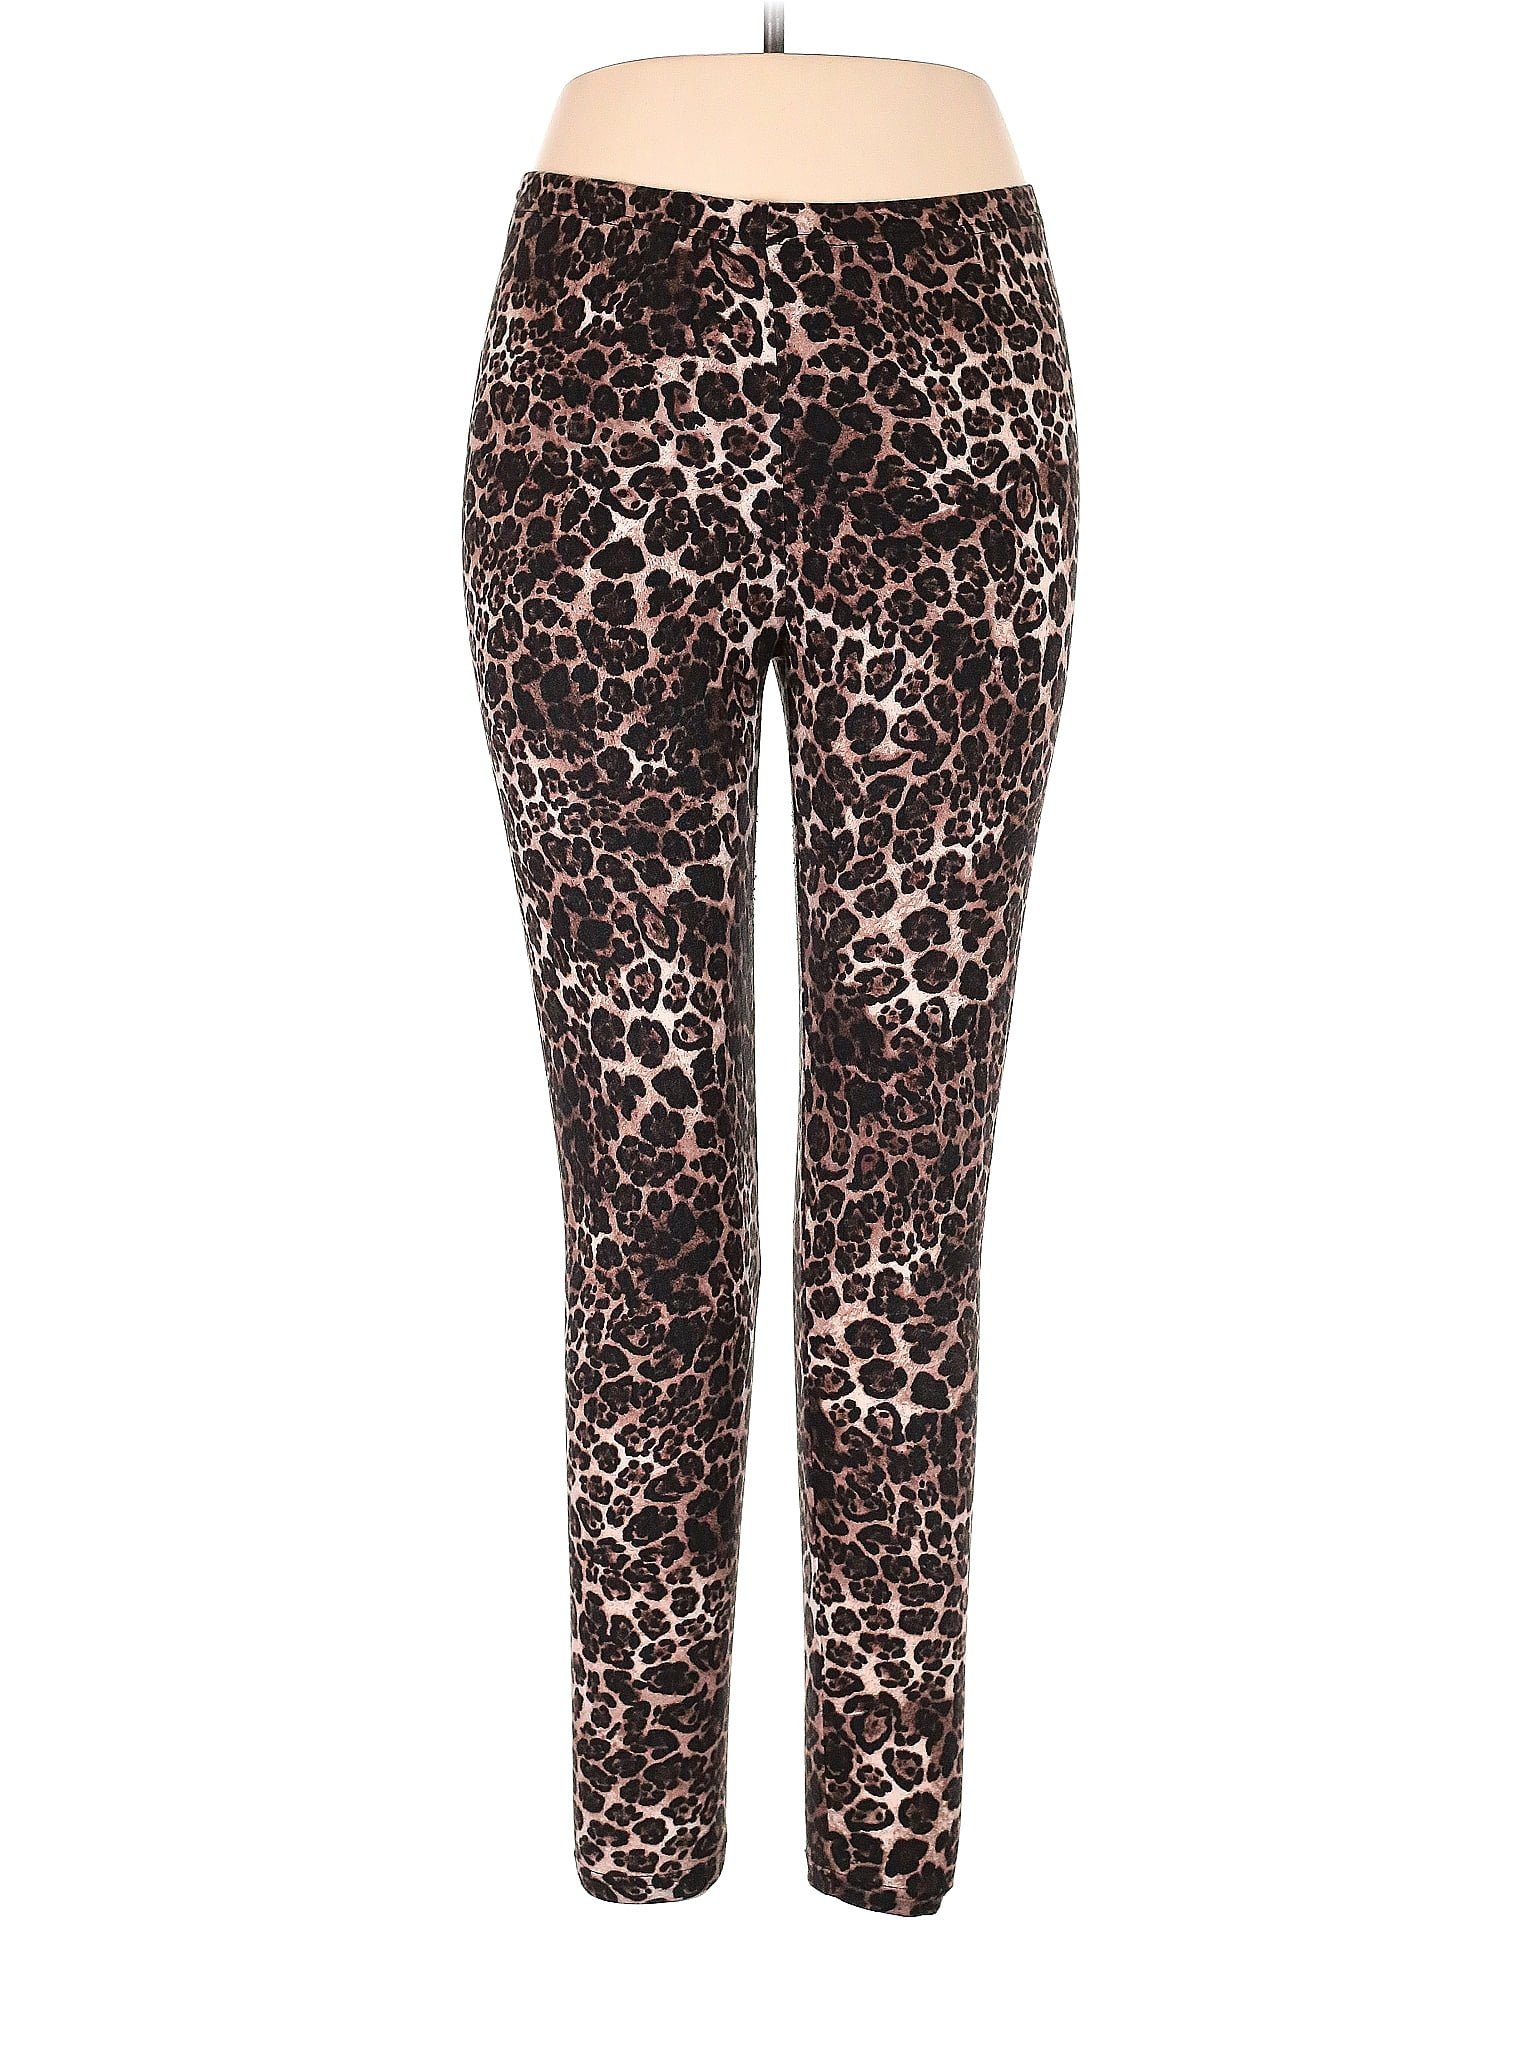 Bobbie Brooks 100% Polyester Leopard Print Multi Color Brown Leggings Size  XL - 38% off